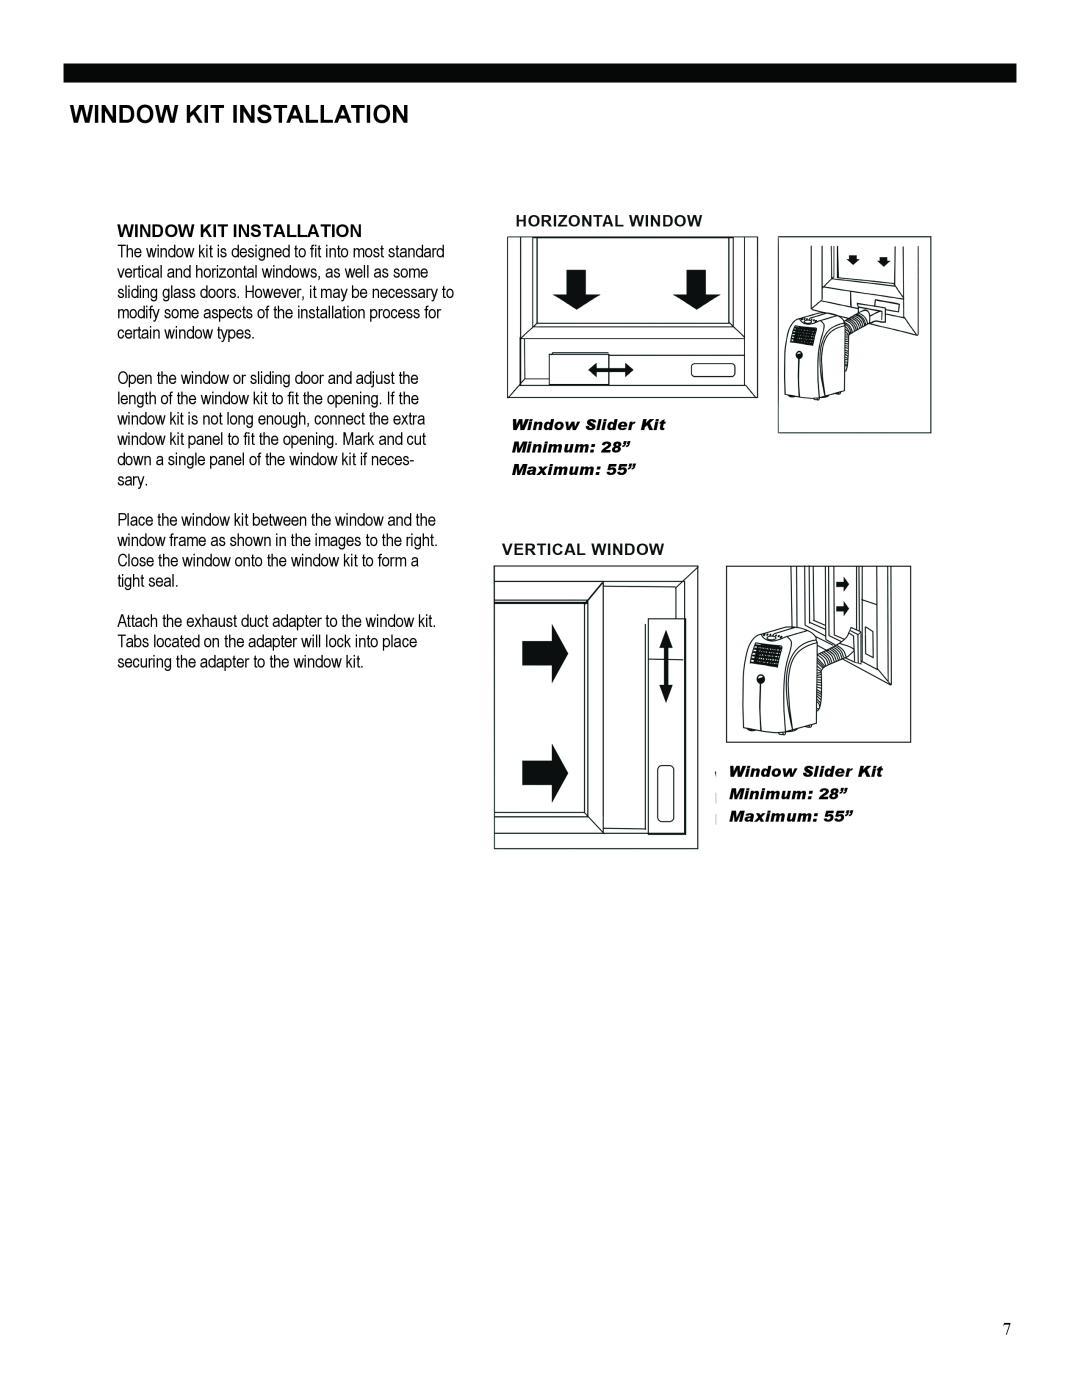 Soleus Air PH3-12R-03 manual Window Kit Installation 